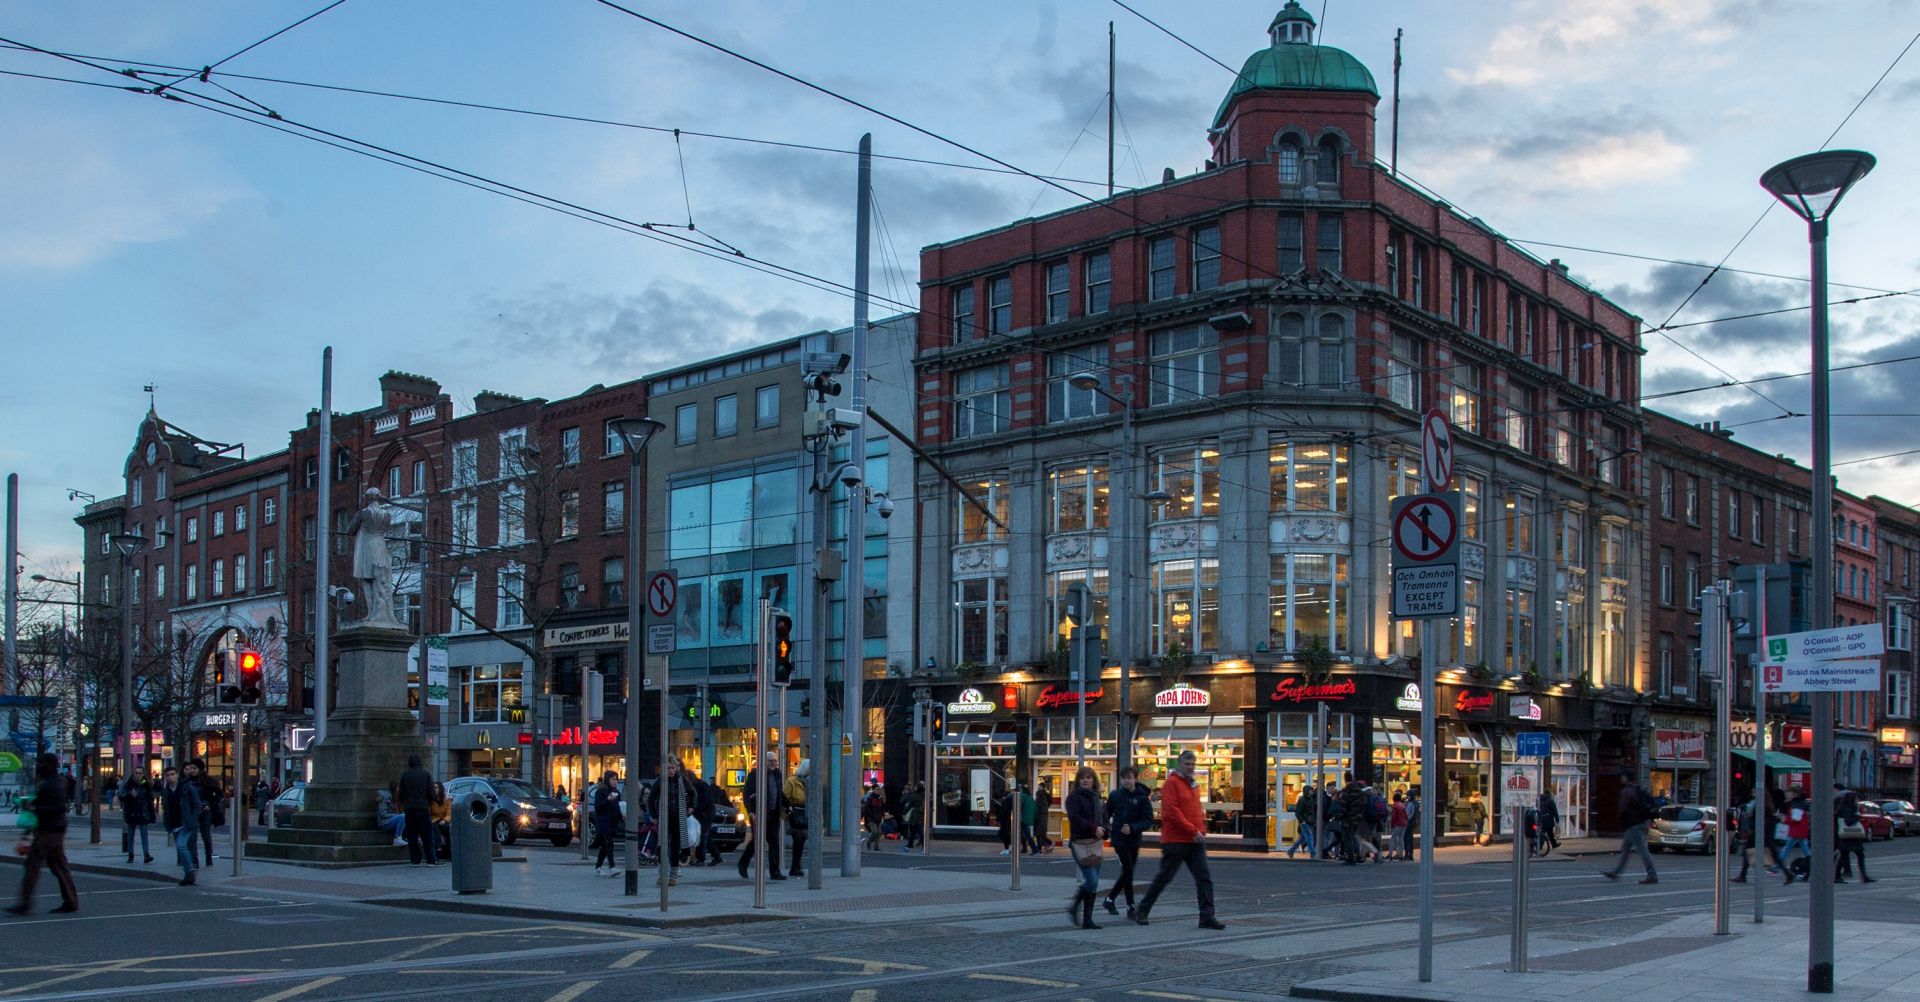 24.03.2018., Dublin, Irska - Centar Dublina, glavnog grada Irske. 
Photo: Nel Pavletic/PIXSELL